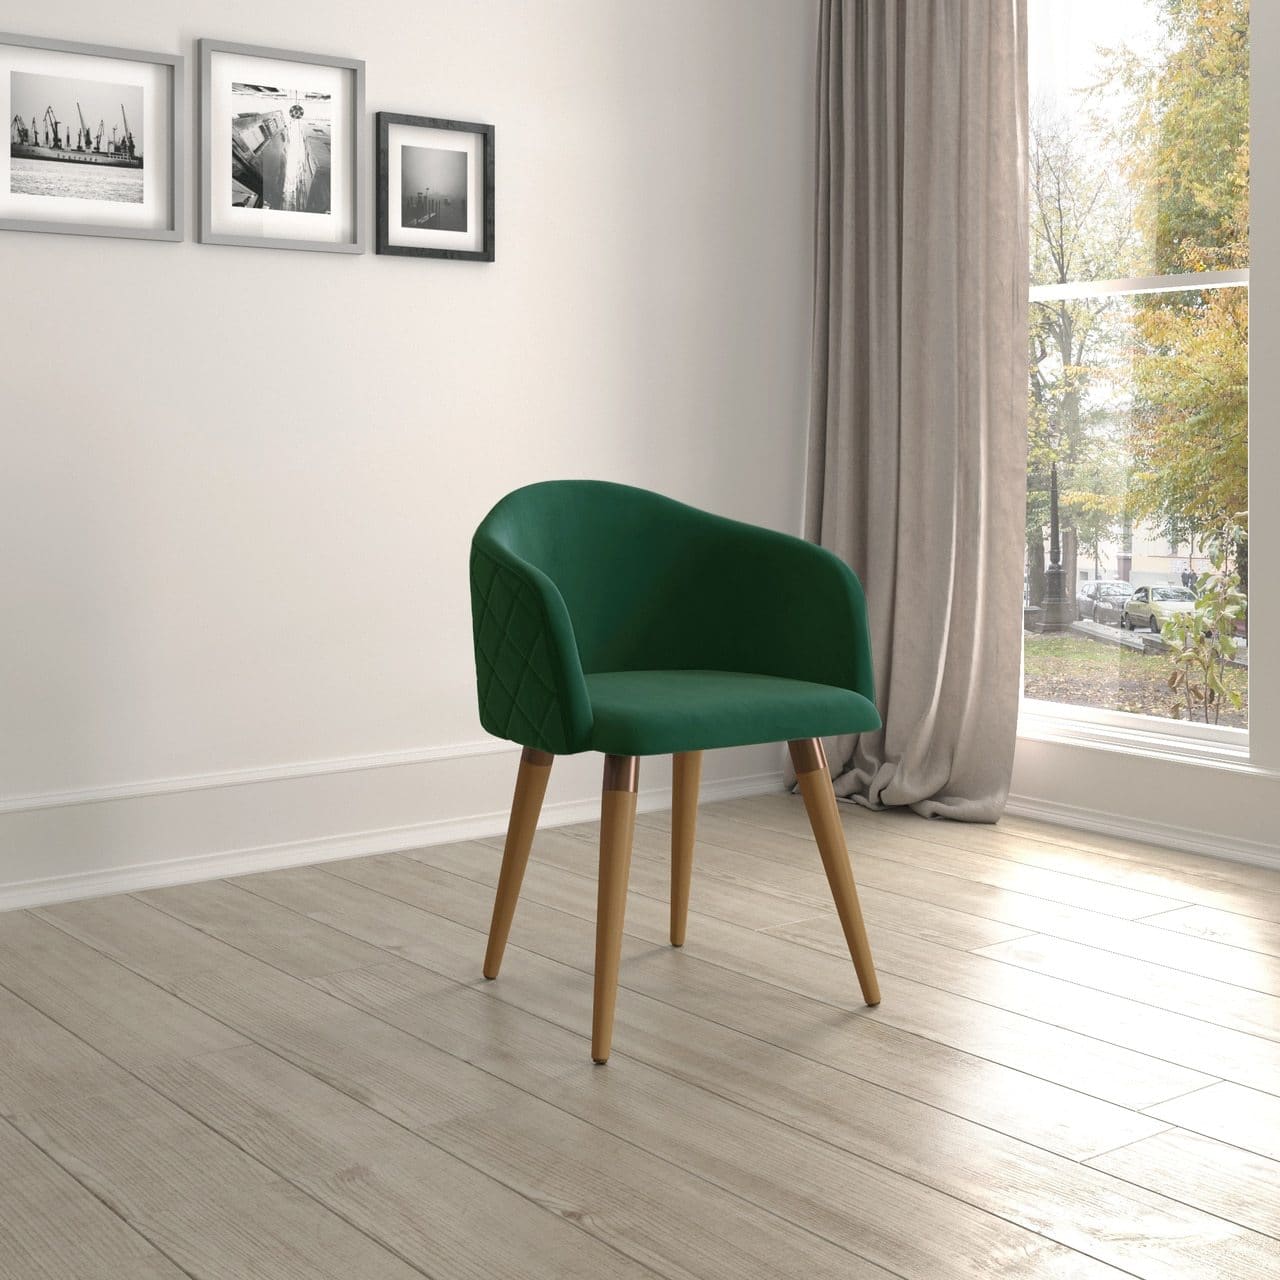 Manhattan Comfort Kari Velvet Matelassé Accent Chair in Green - Set of 2 1020483 810025591267